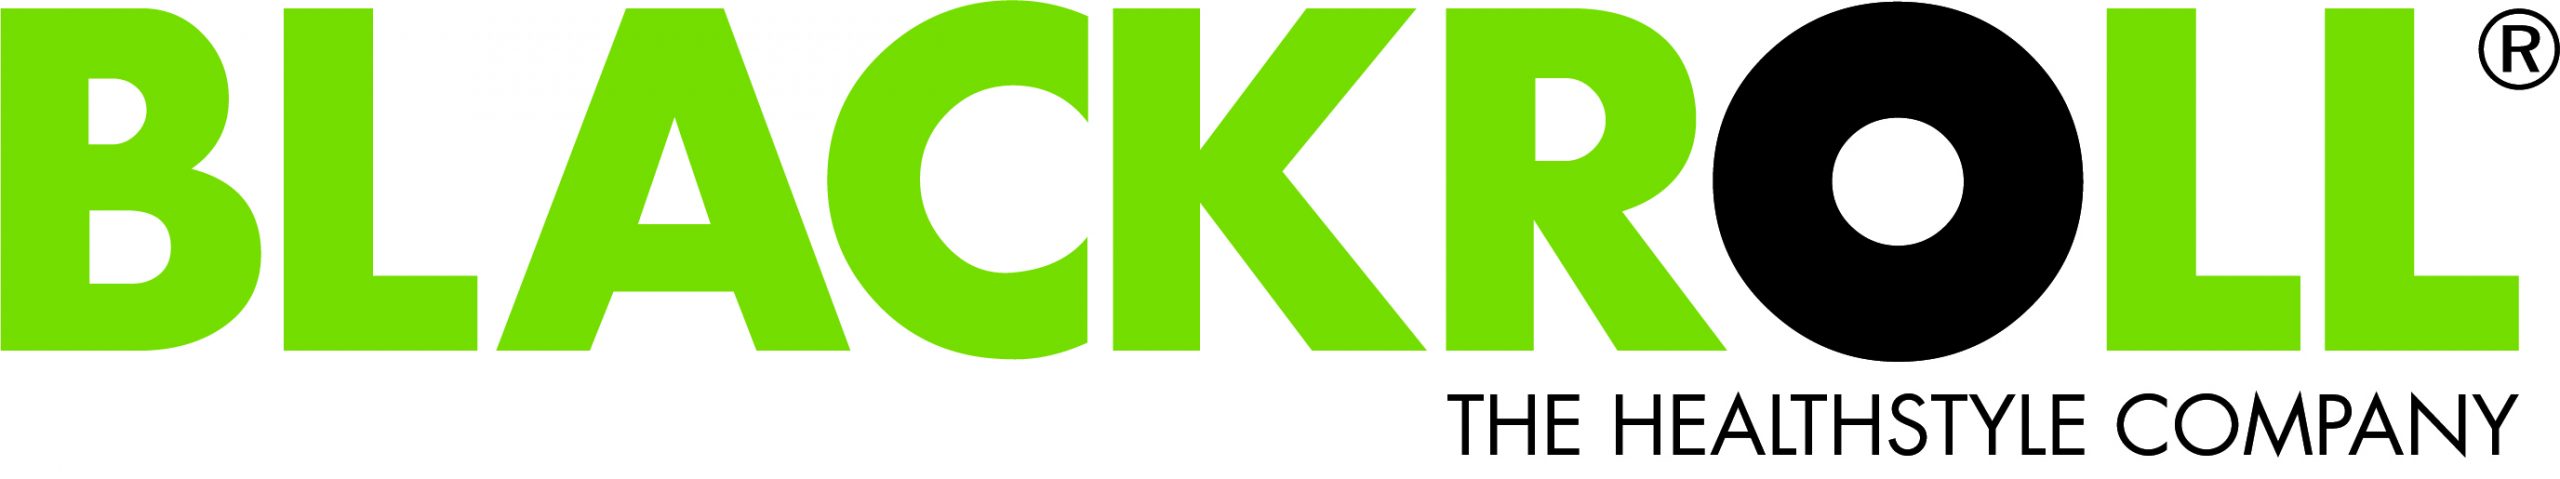 BLACKROLL_Logo_green-black_Healthstyle